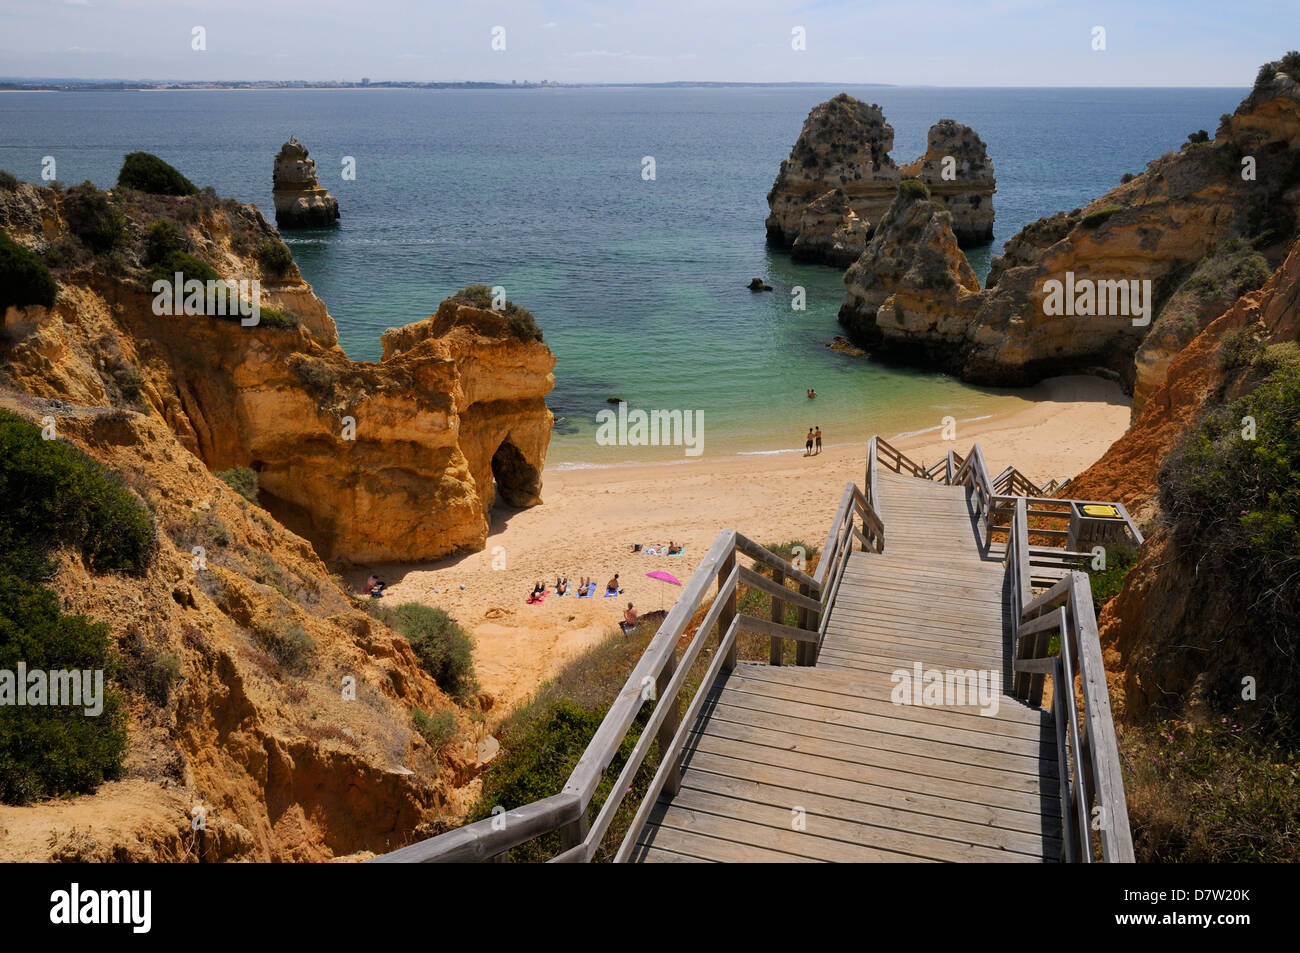 Wooden steps down to Praia do Camilo (Camel beach), Lagos, Algarve, Portugal Stock Photo